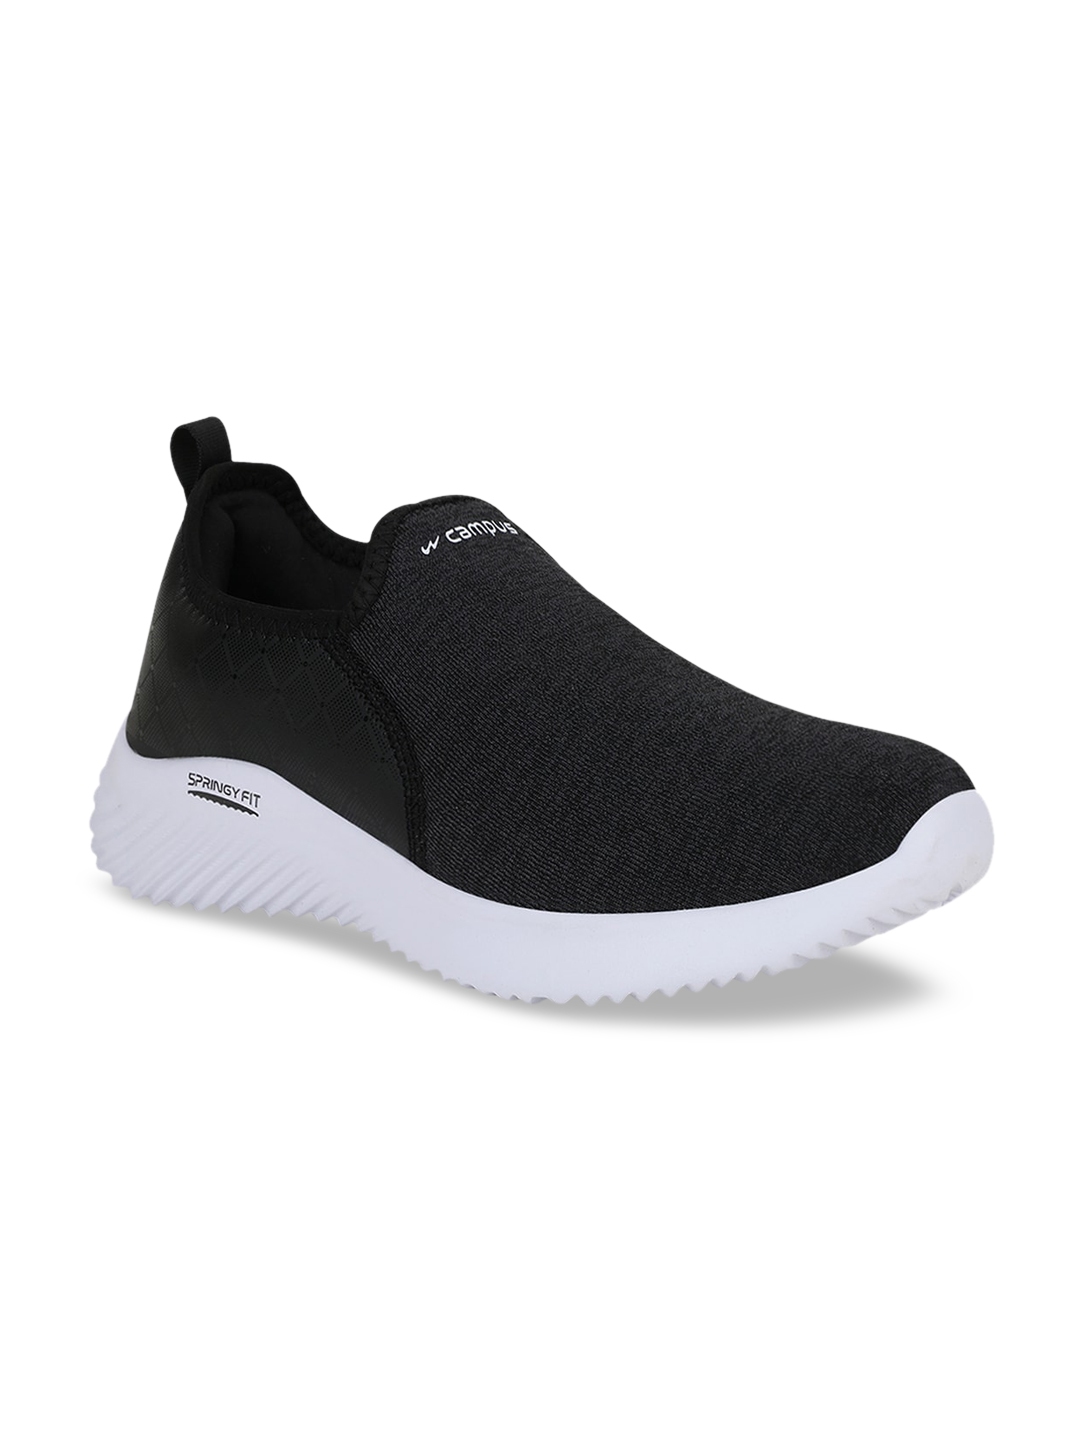 Buy Campus Men Black & White Target Walking Shoes - Sports Shoes for ...